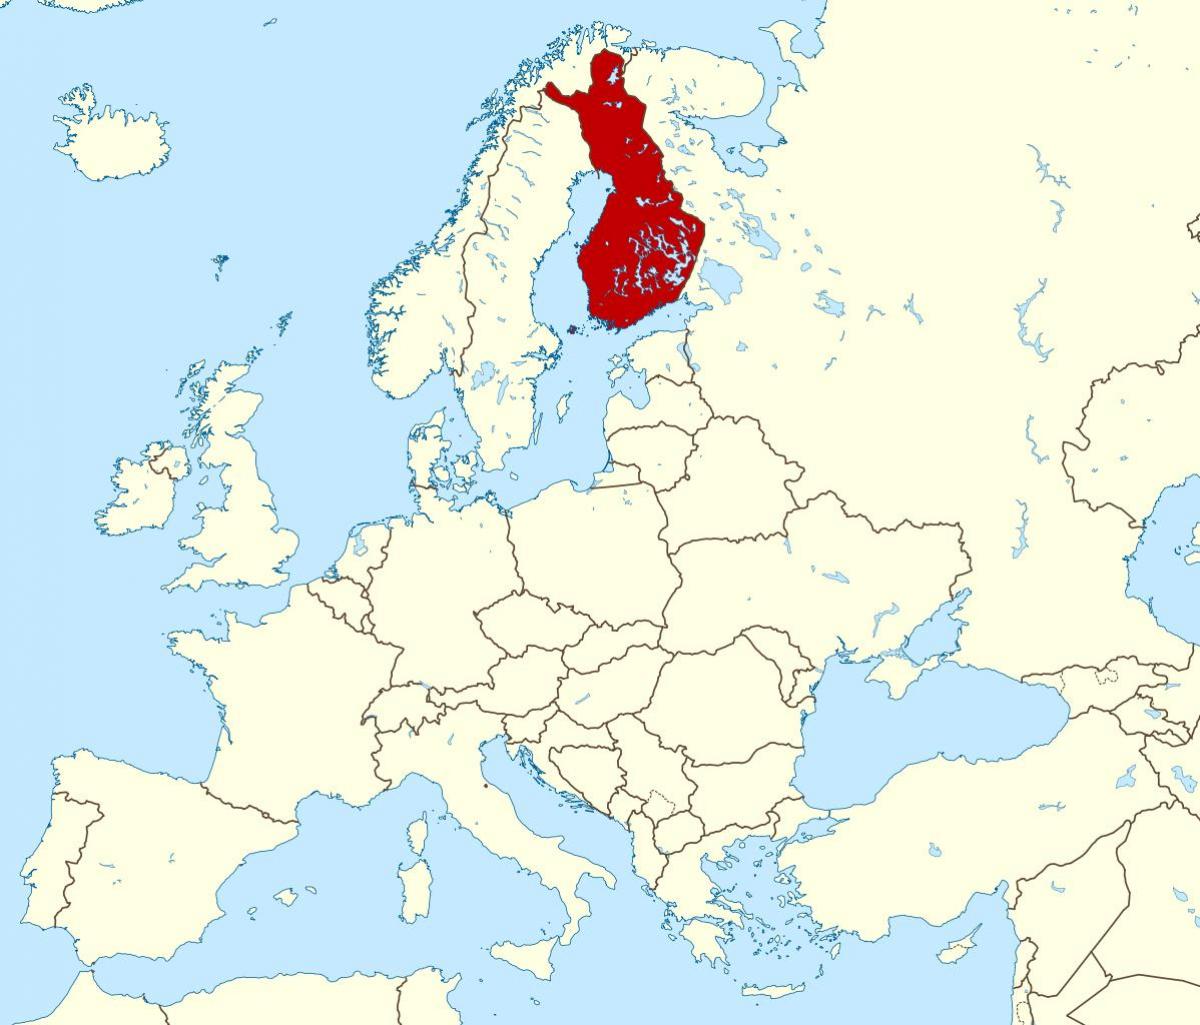 verden kort, der viser, Finland